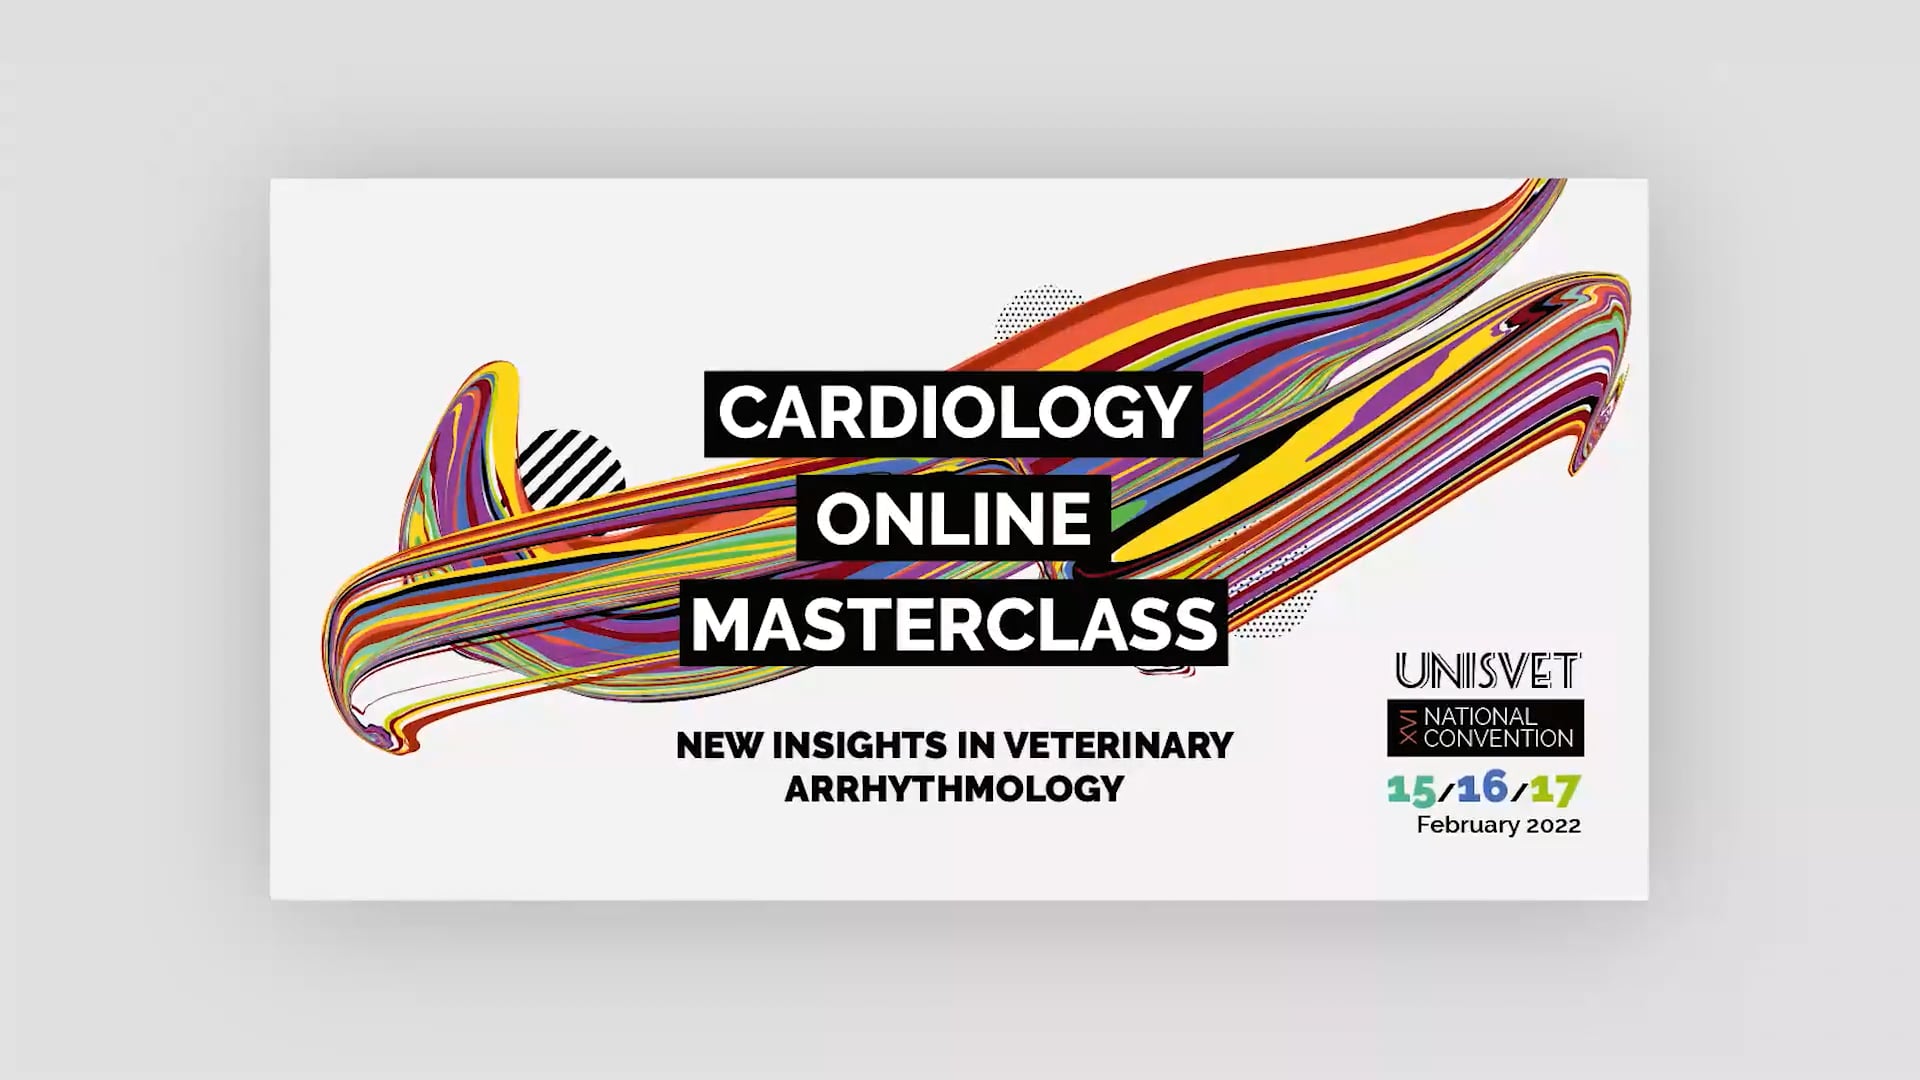 XVICongressoNazionale-Video-Promo-CardiologyMasterclass